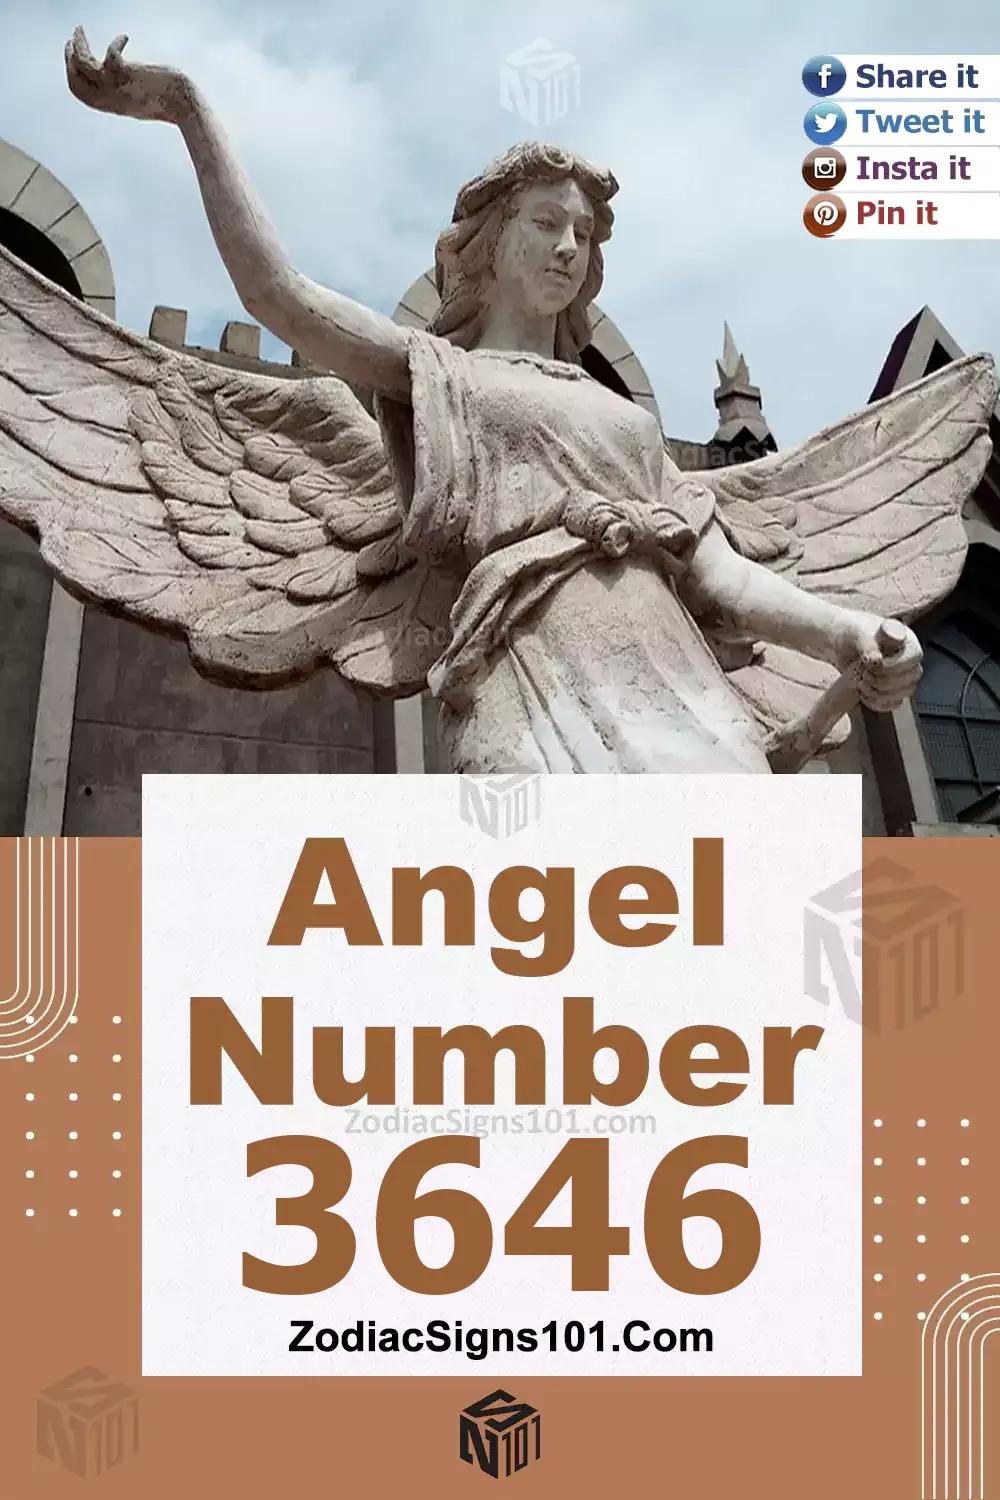 3646-Angel-Number-Meaning.jpg